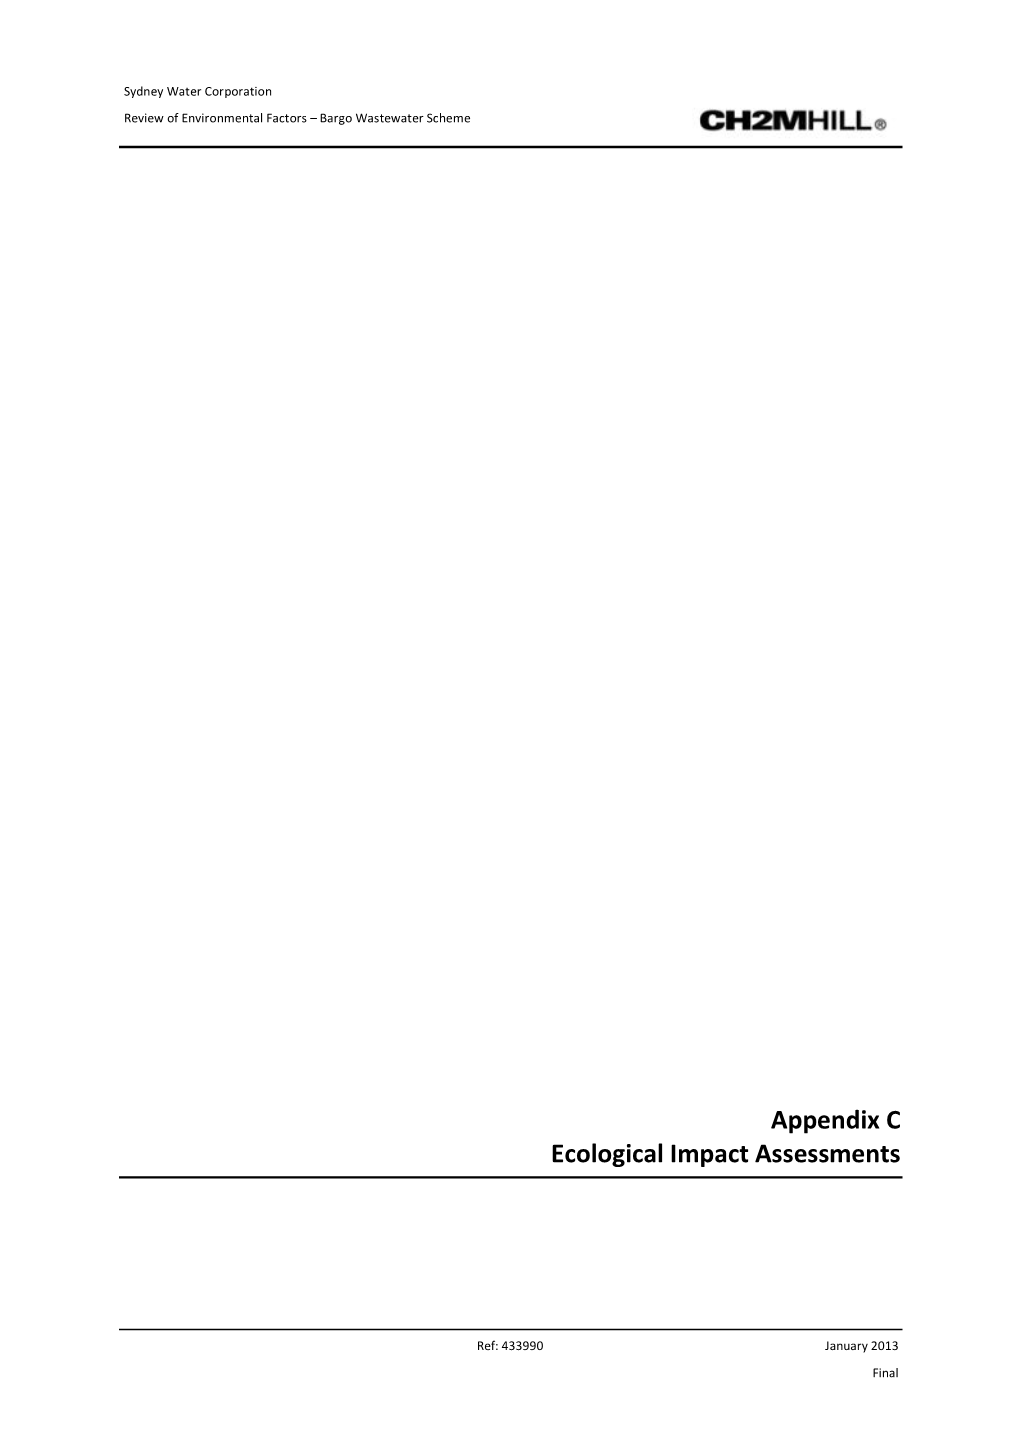 Appendix C Ecological Impact Assessments